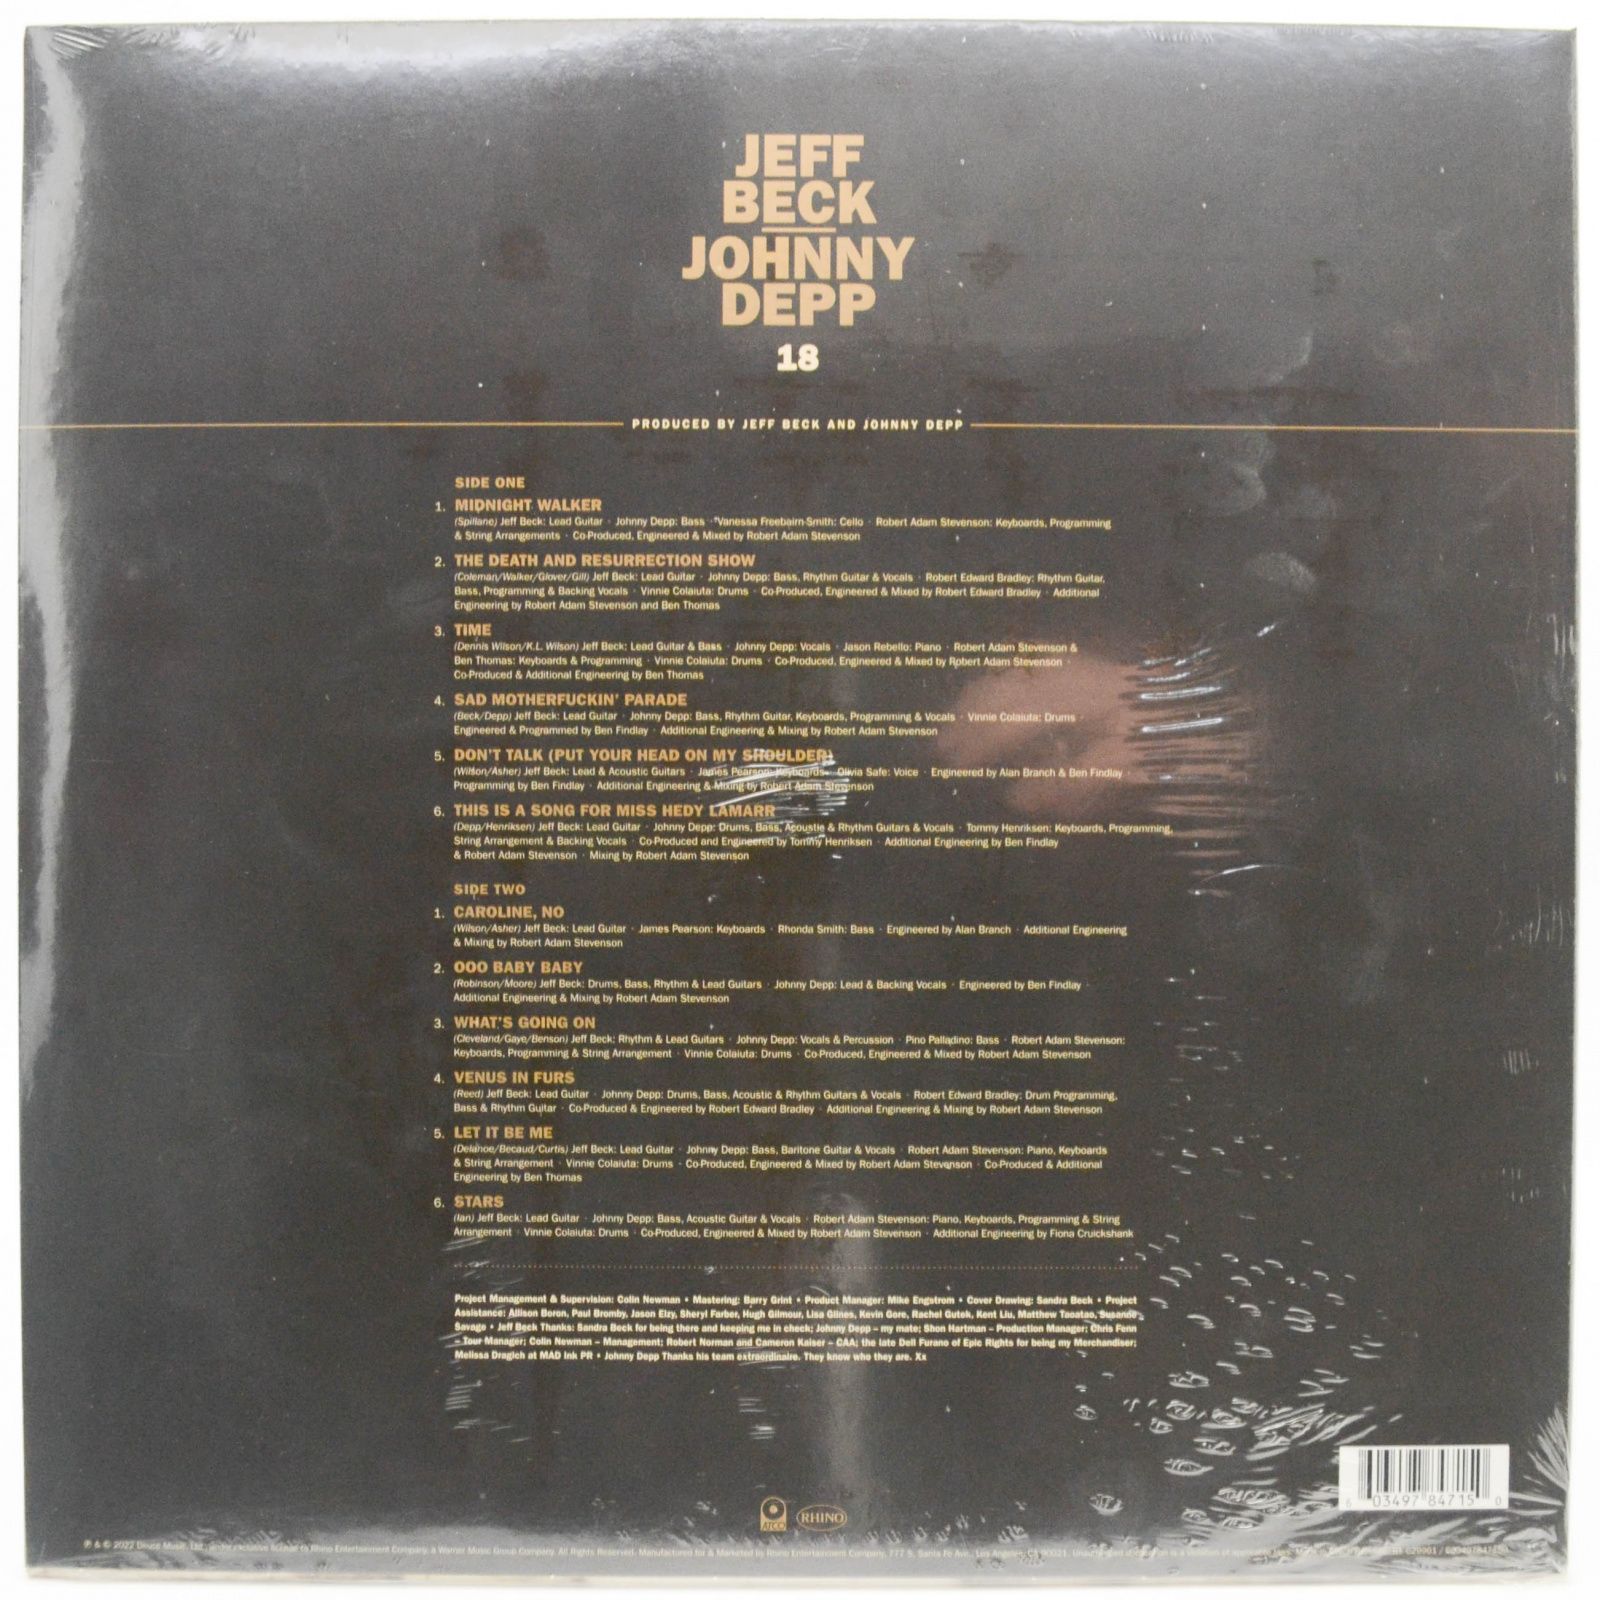 Jeff Beck — Johnny Depp – 18, 2022